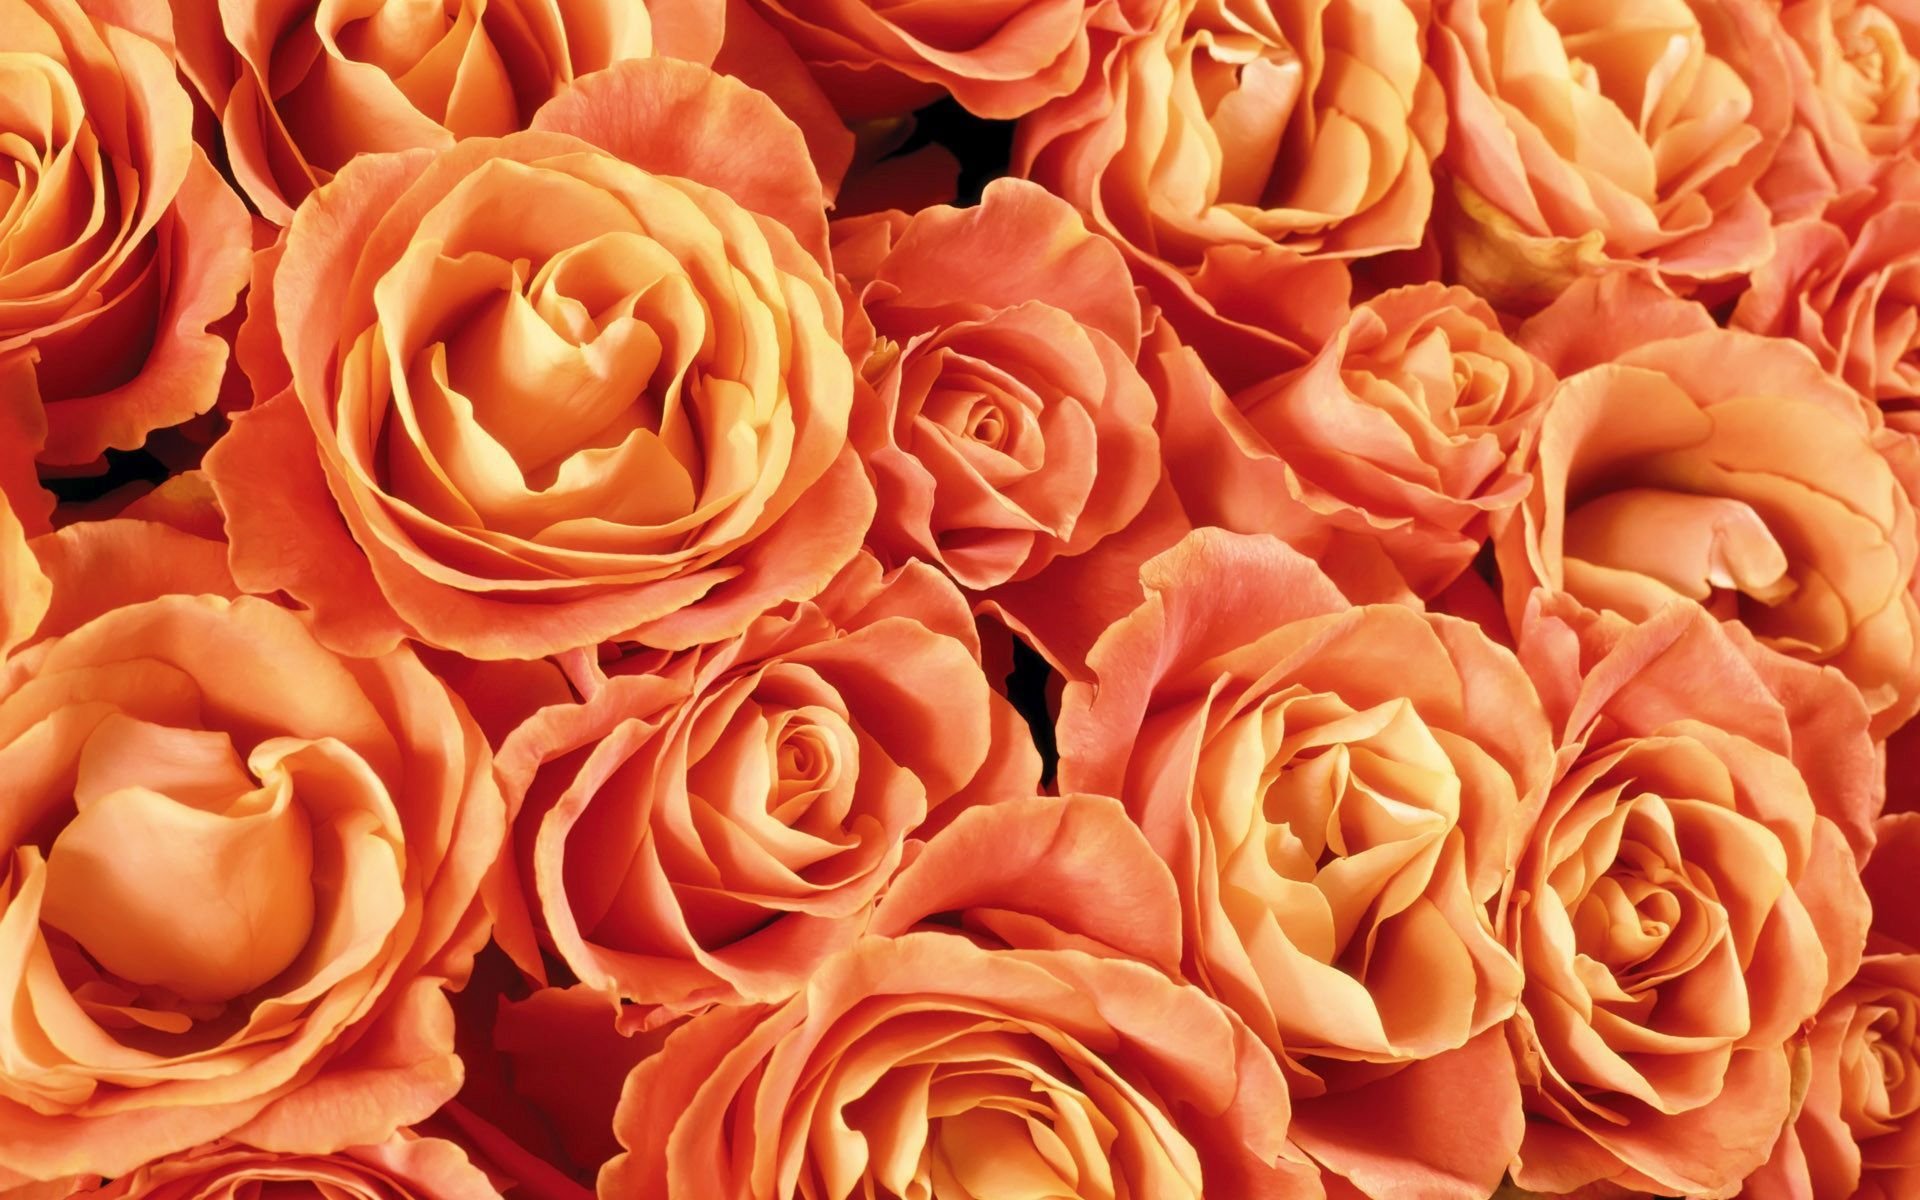 Peach-Colored Roses